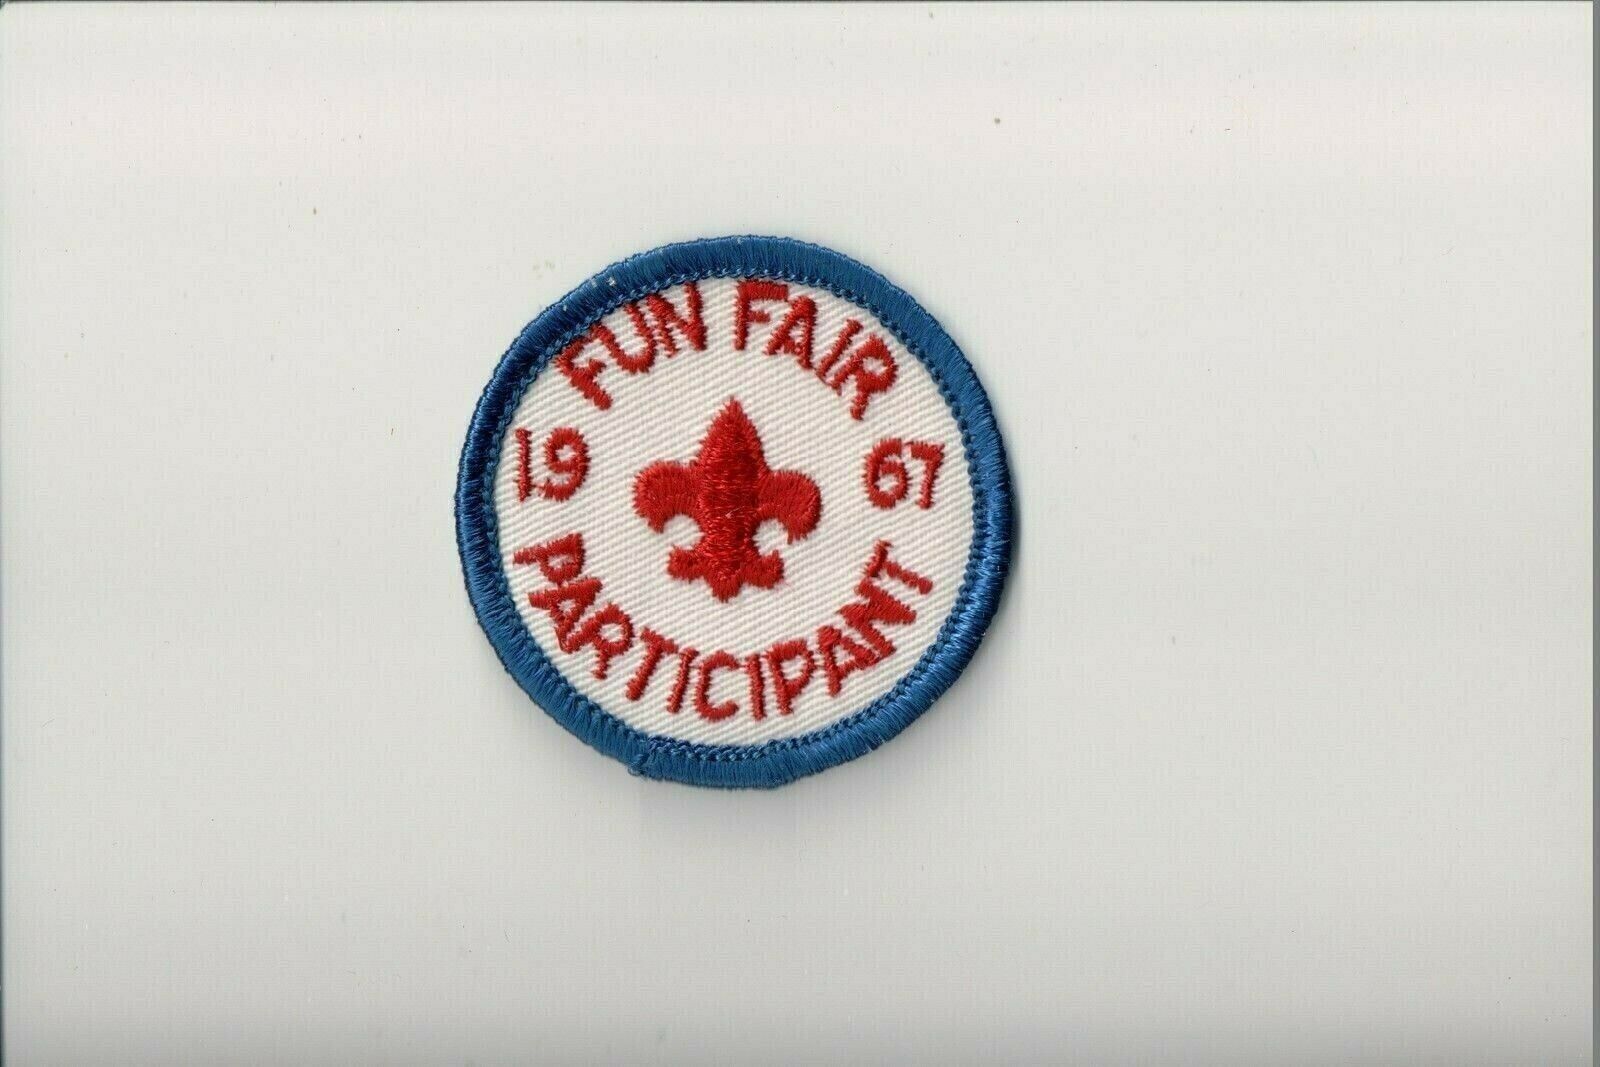 1967 Fun Fair Participant patch